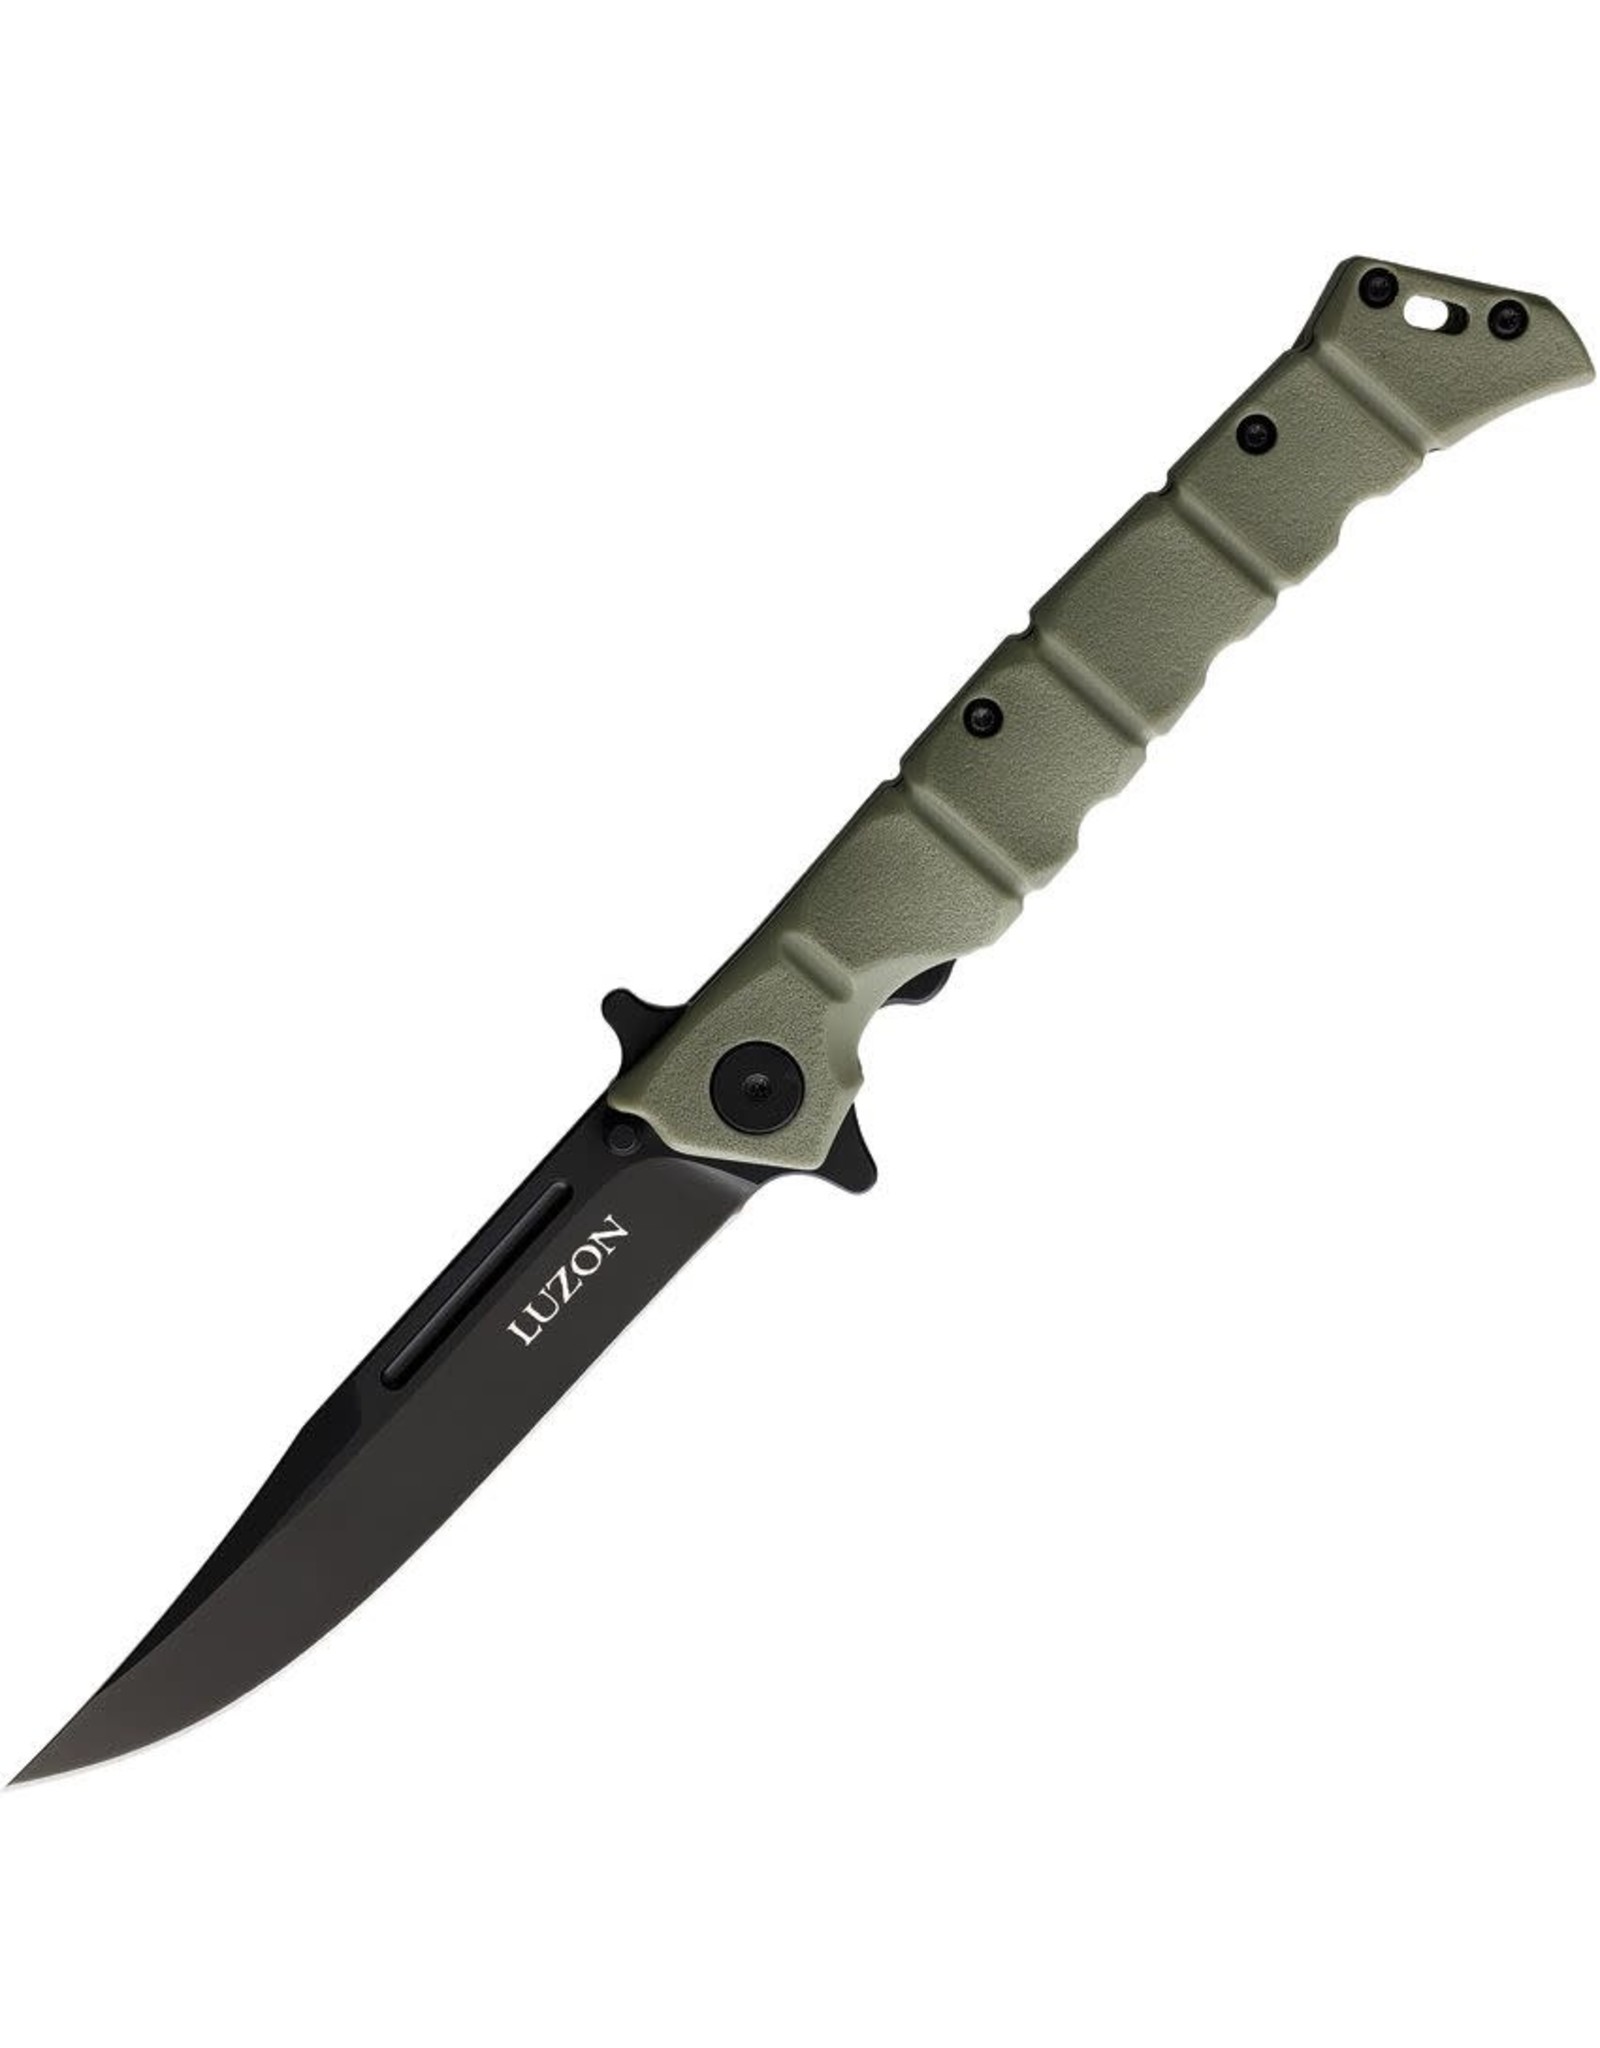 Cold Steel Cold Steel 20NQL-ODBK Medium Luzon Flipper Knife 4" Black Plain Blade, OD Green GFN Handles, Liner Lock